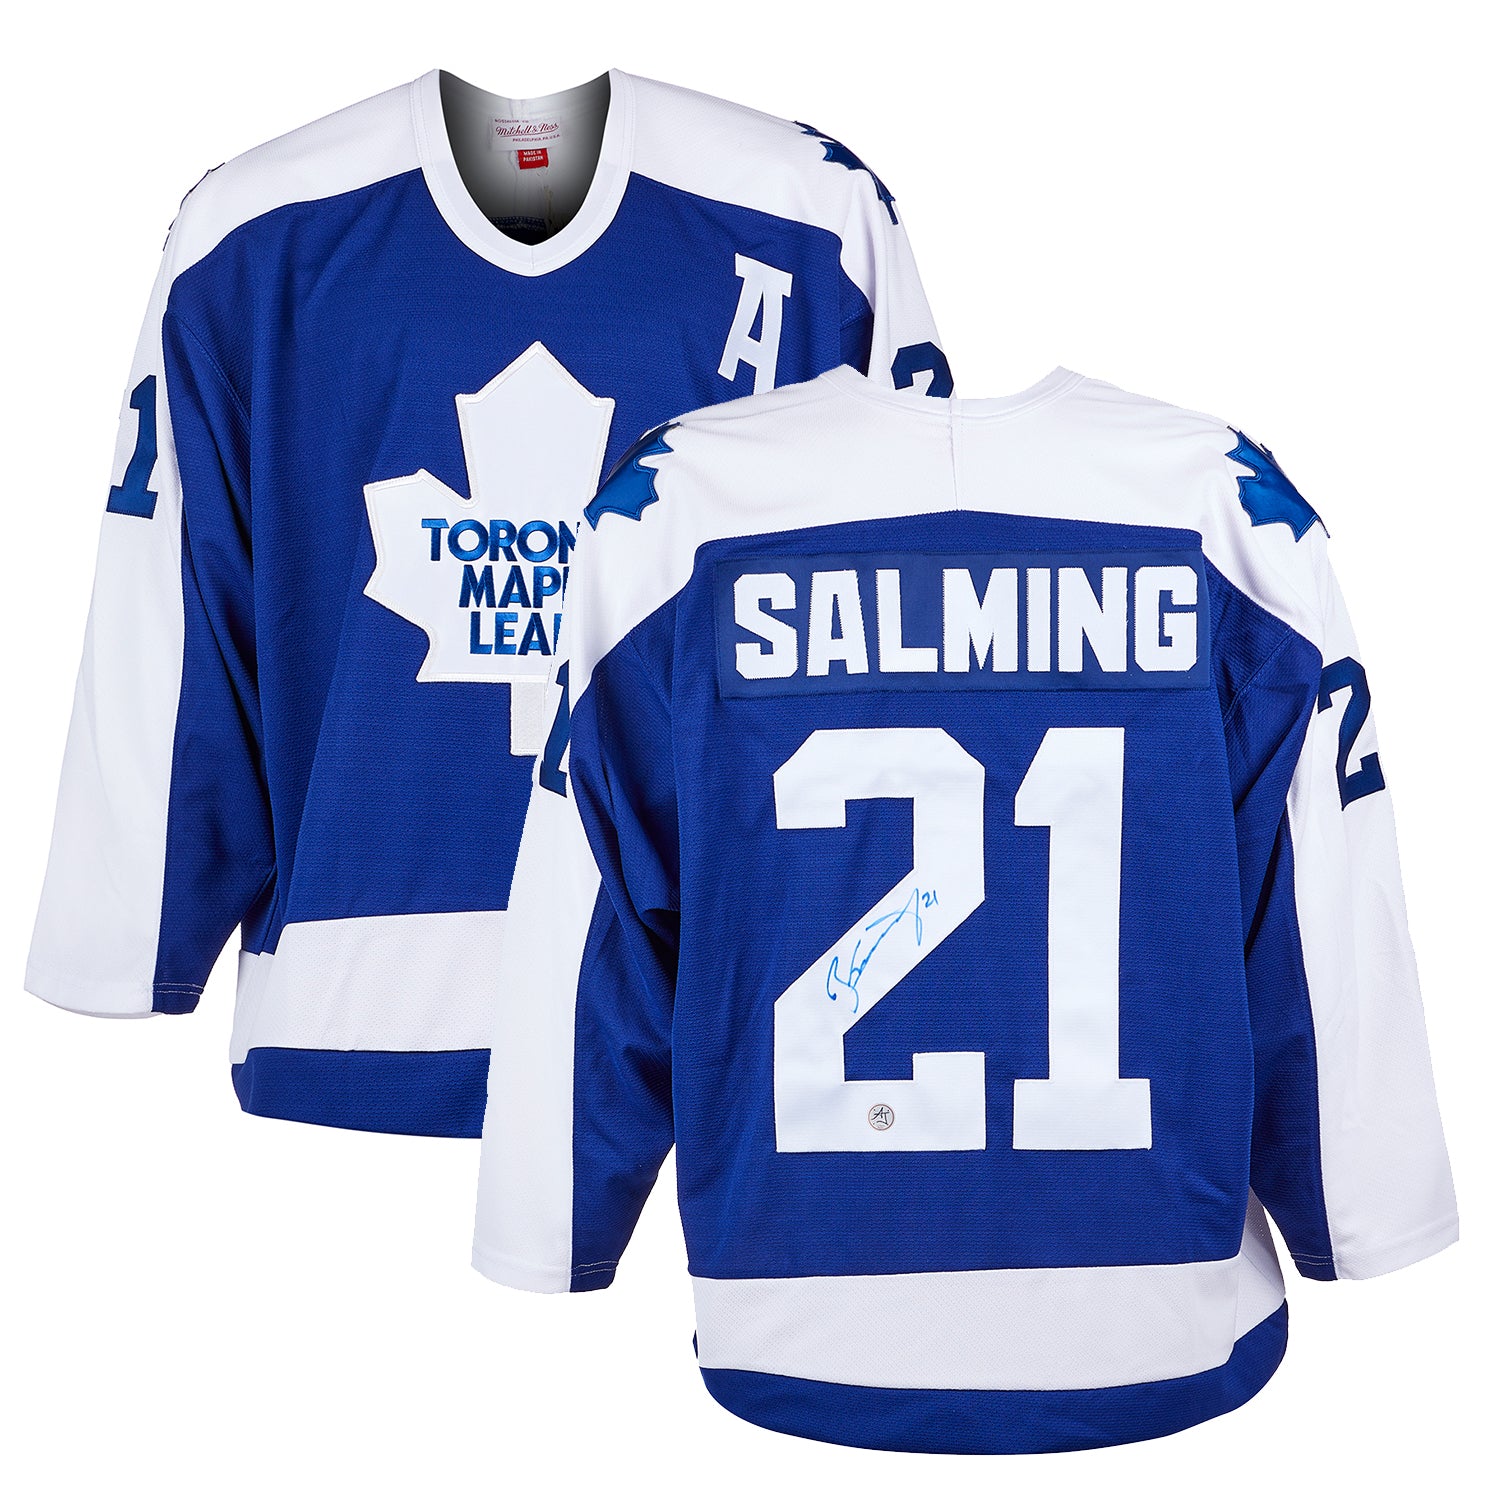 Borje Salming Signed Toronto Maple Leafs Retro Mitchell & Ness Jersey